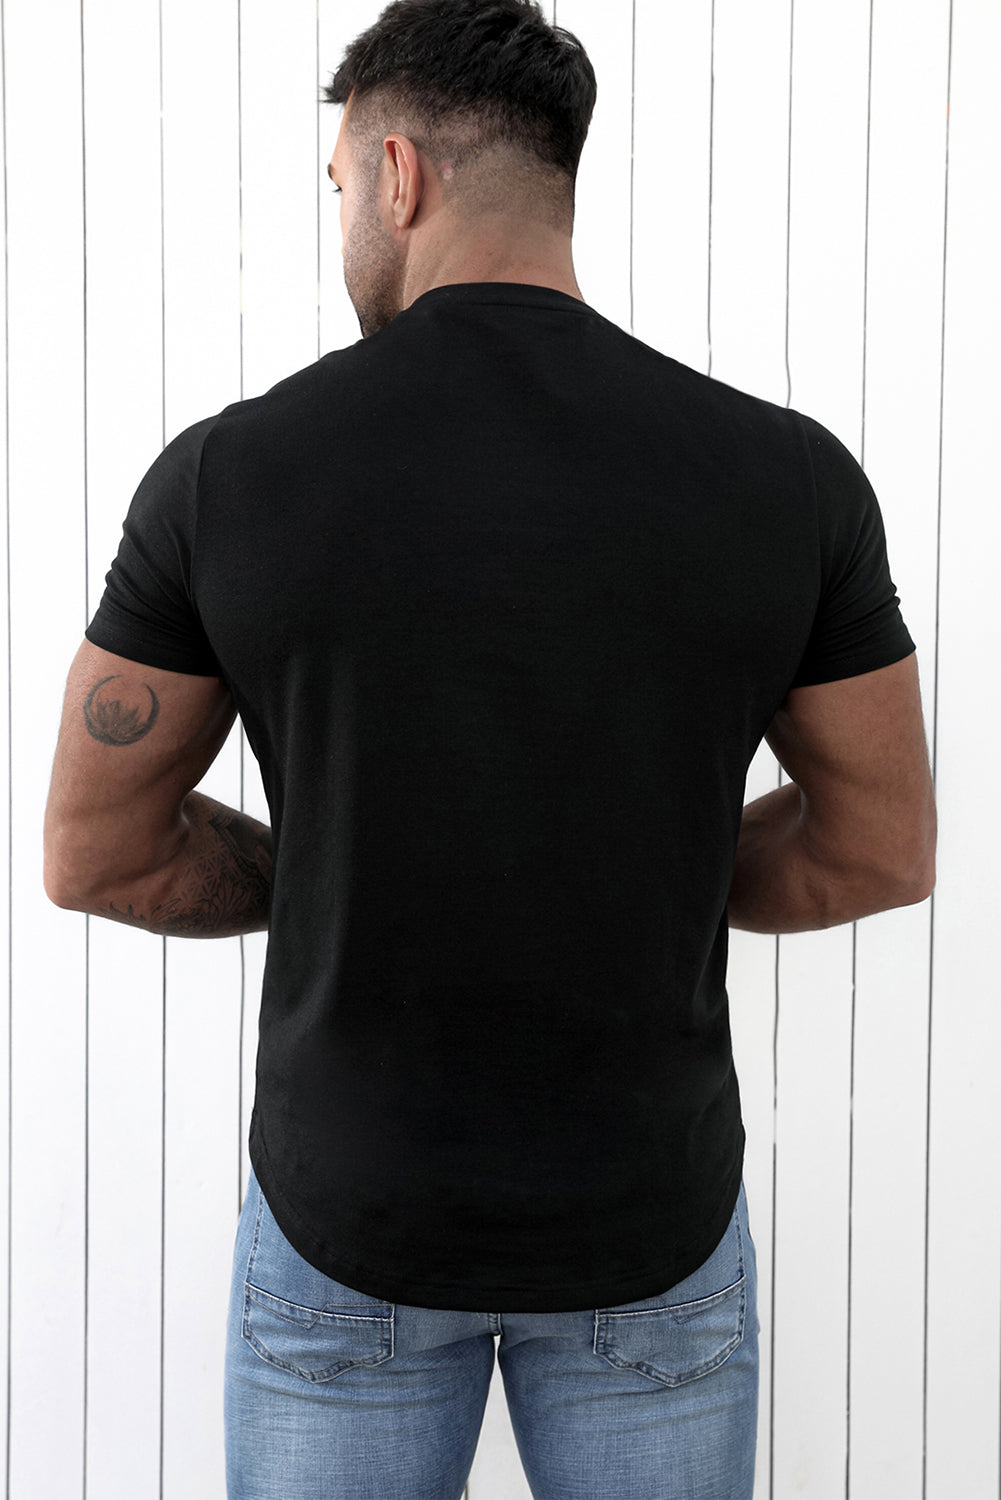 Black American Flag DAD Letter Graphic Print Muscle Fit Men's T Shirt Men's Tops JT's Designer Fashion